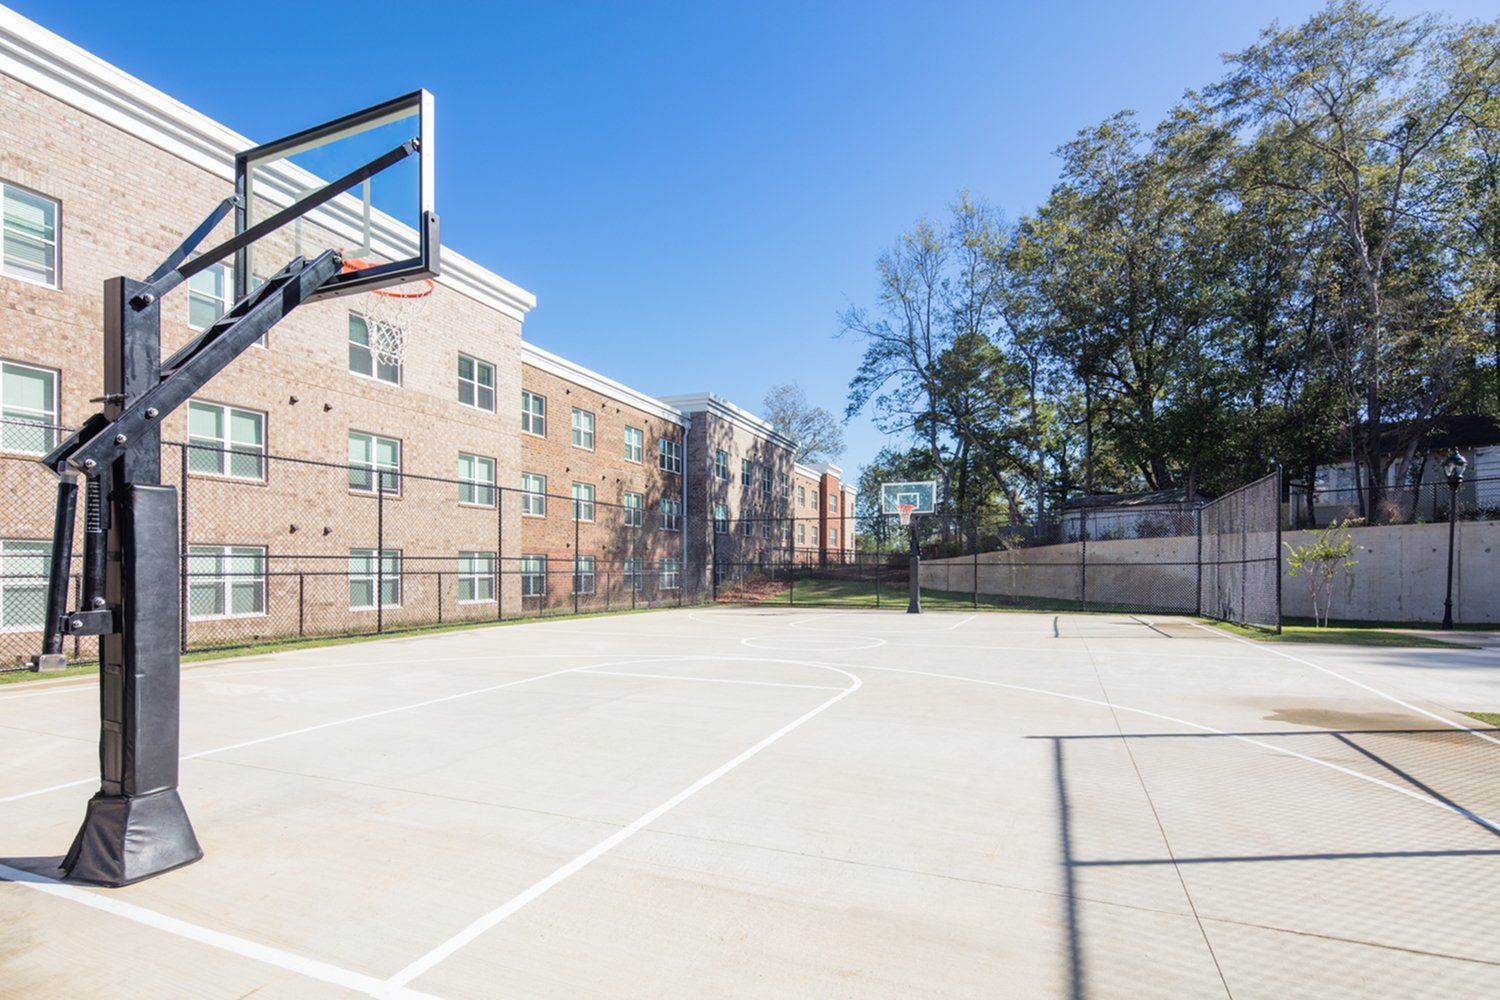 Basketball Court at Evolve Tuscaloosa.